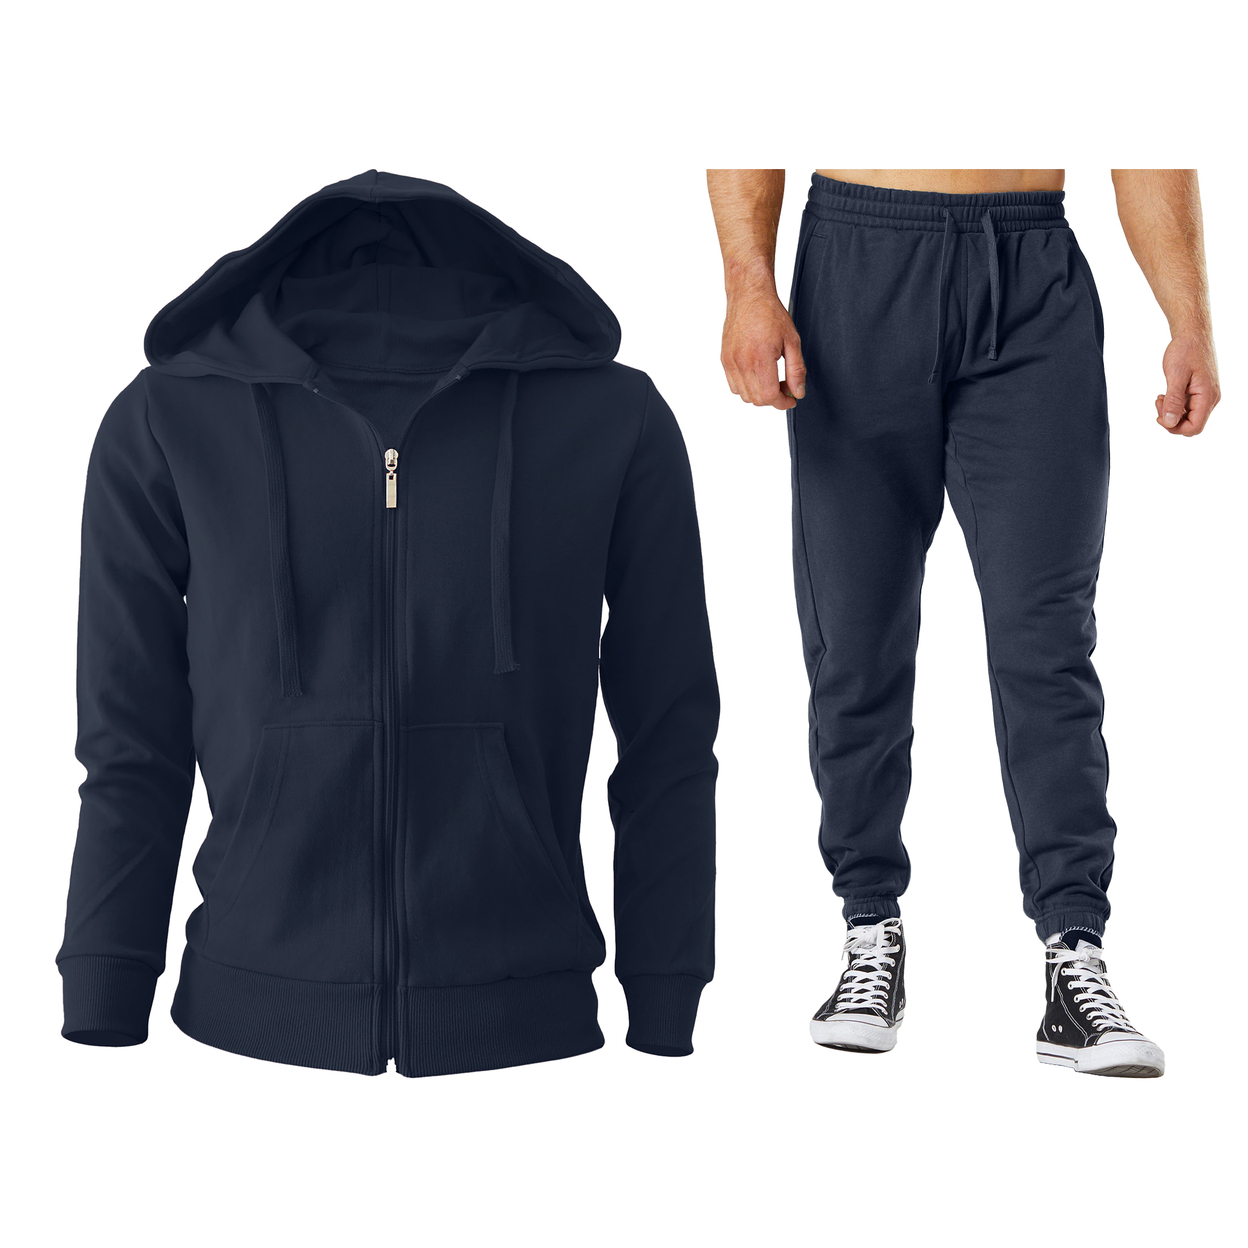 2/4-Piece: Men's Winter Warm Cozy Athletic Multi-Pockets BIG & TALL Sweatsuit Set - Charcoal, 1, Large